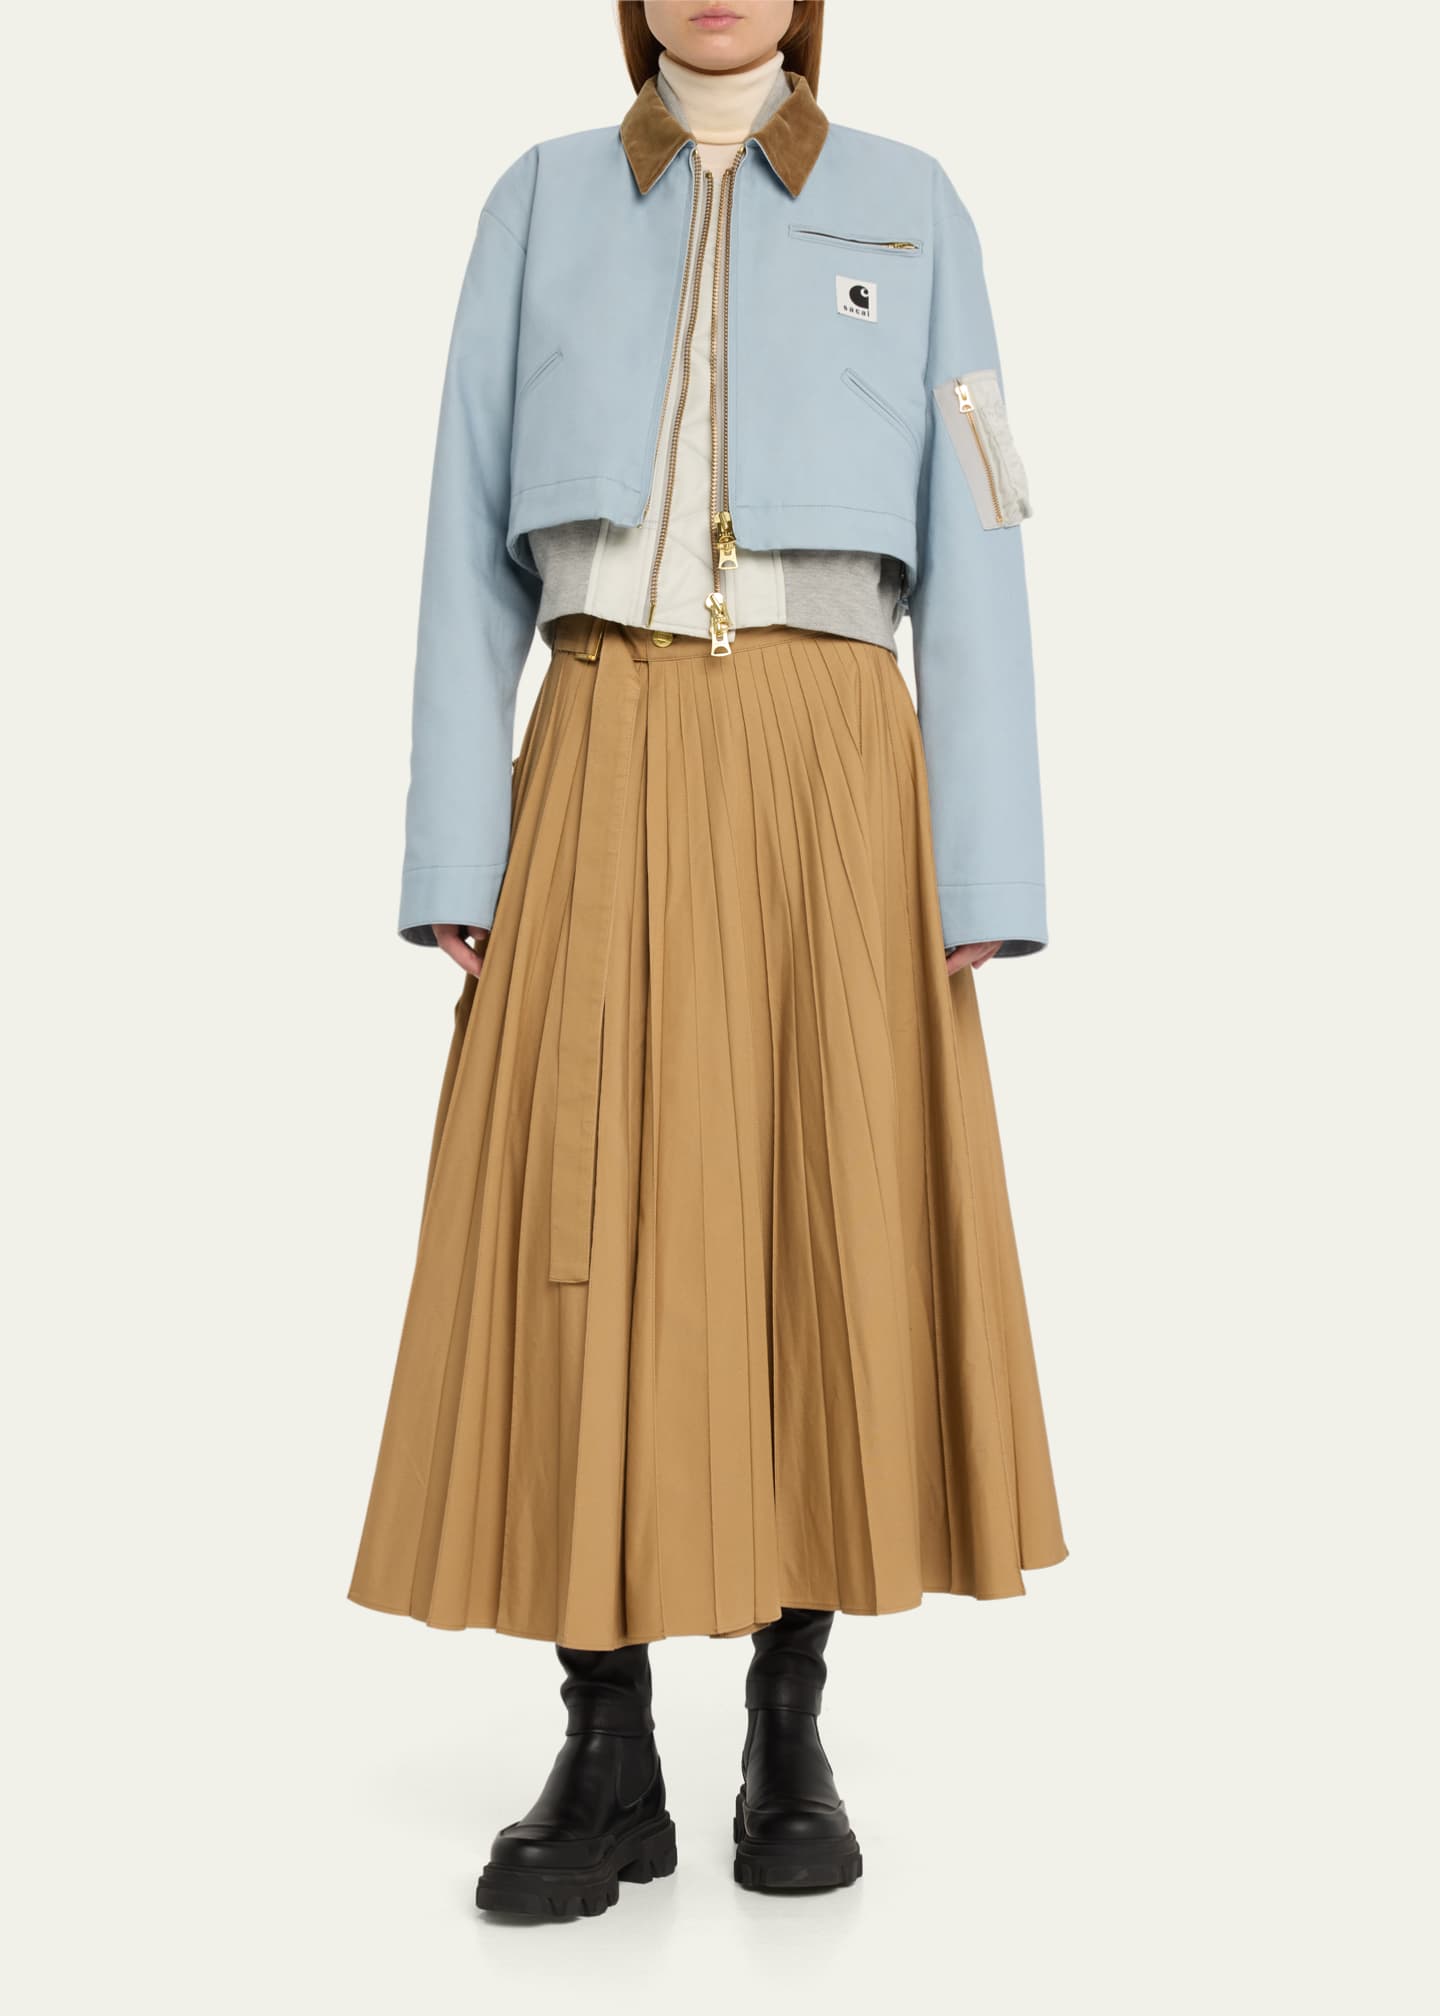 SACAI x Carhartt WIP Pleated Midi Skirt with Belt